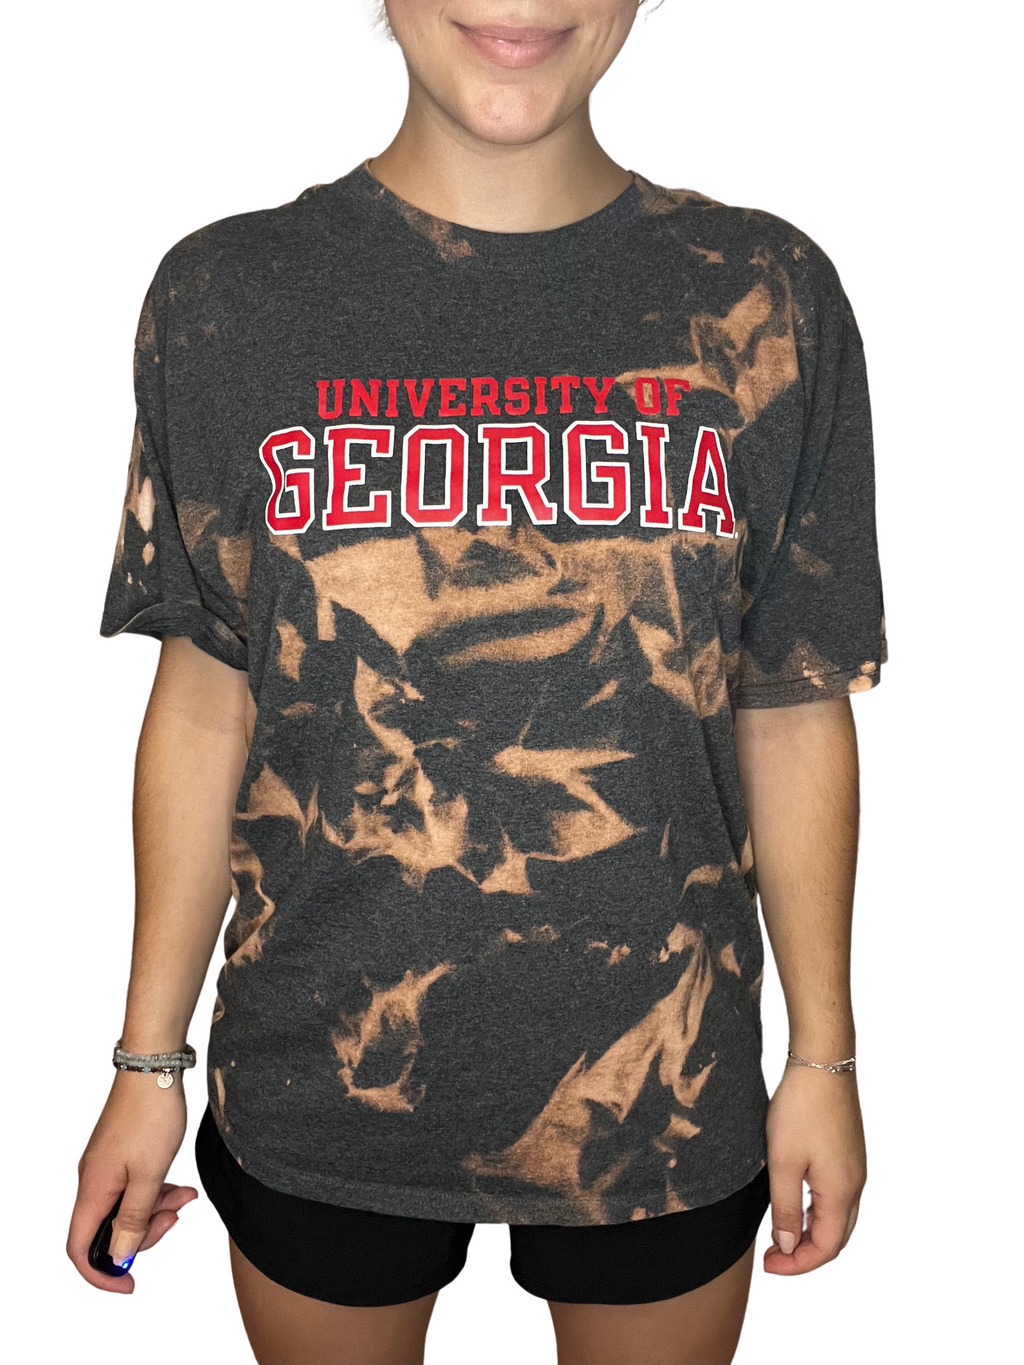 University of Georgia Bleached Shirt